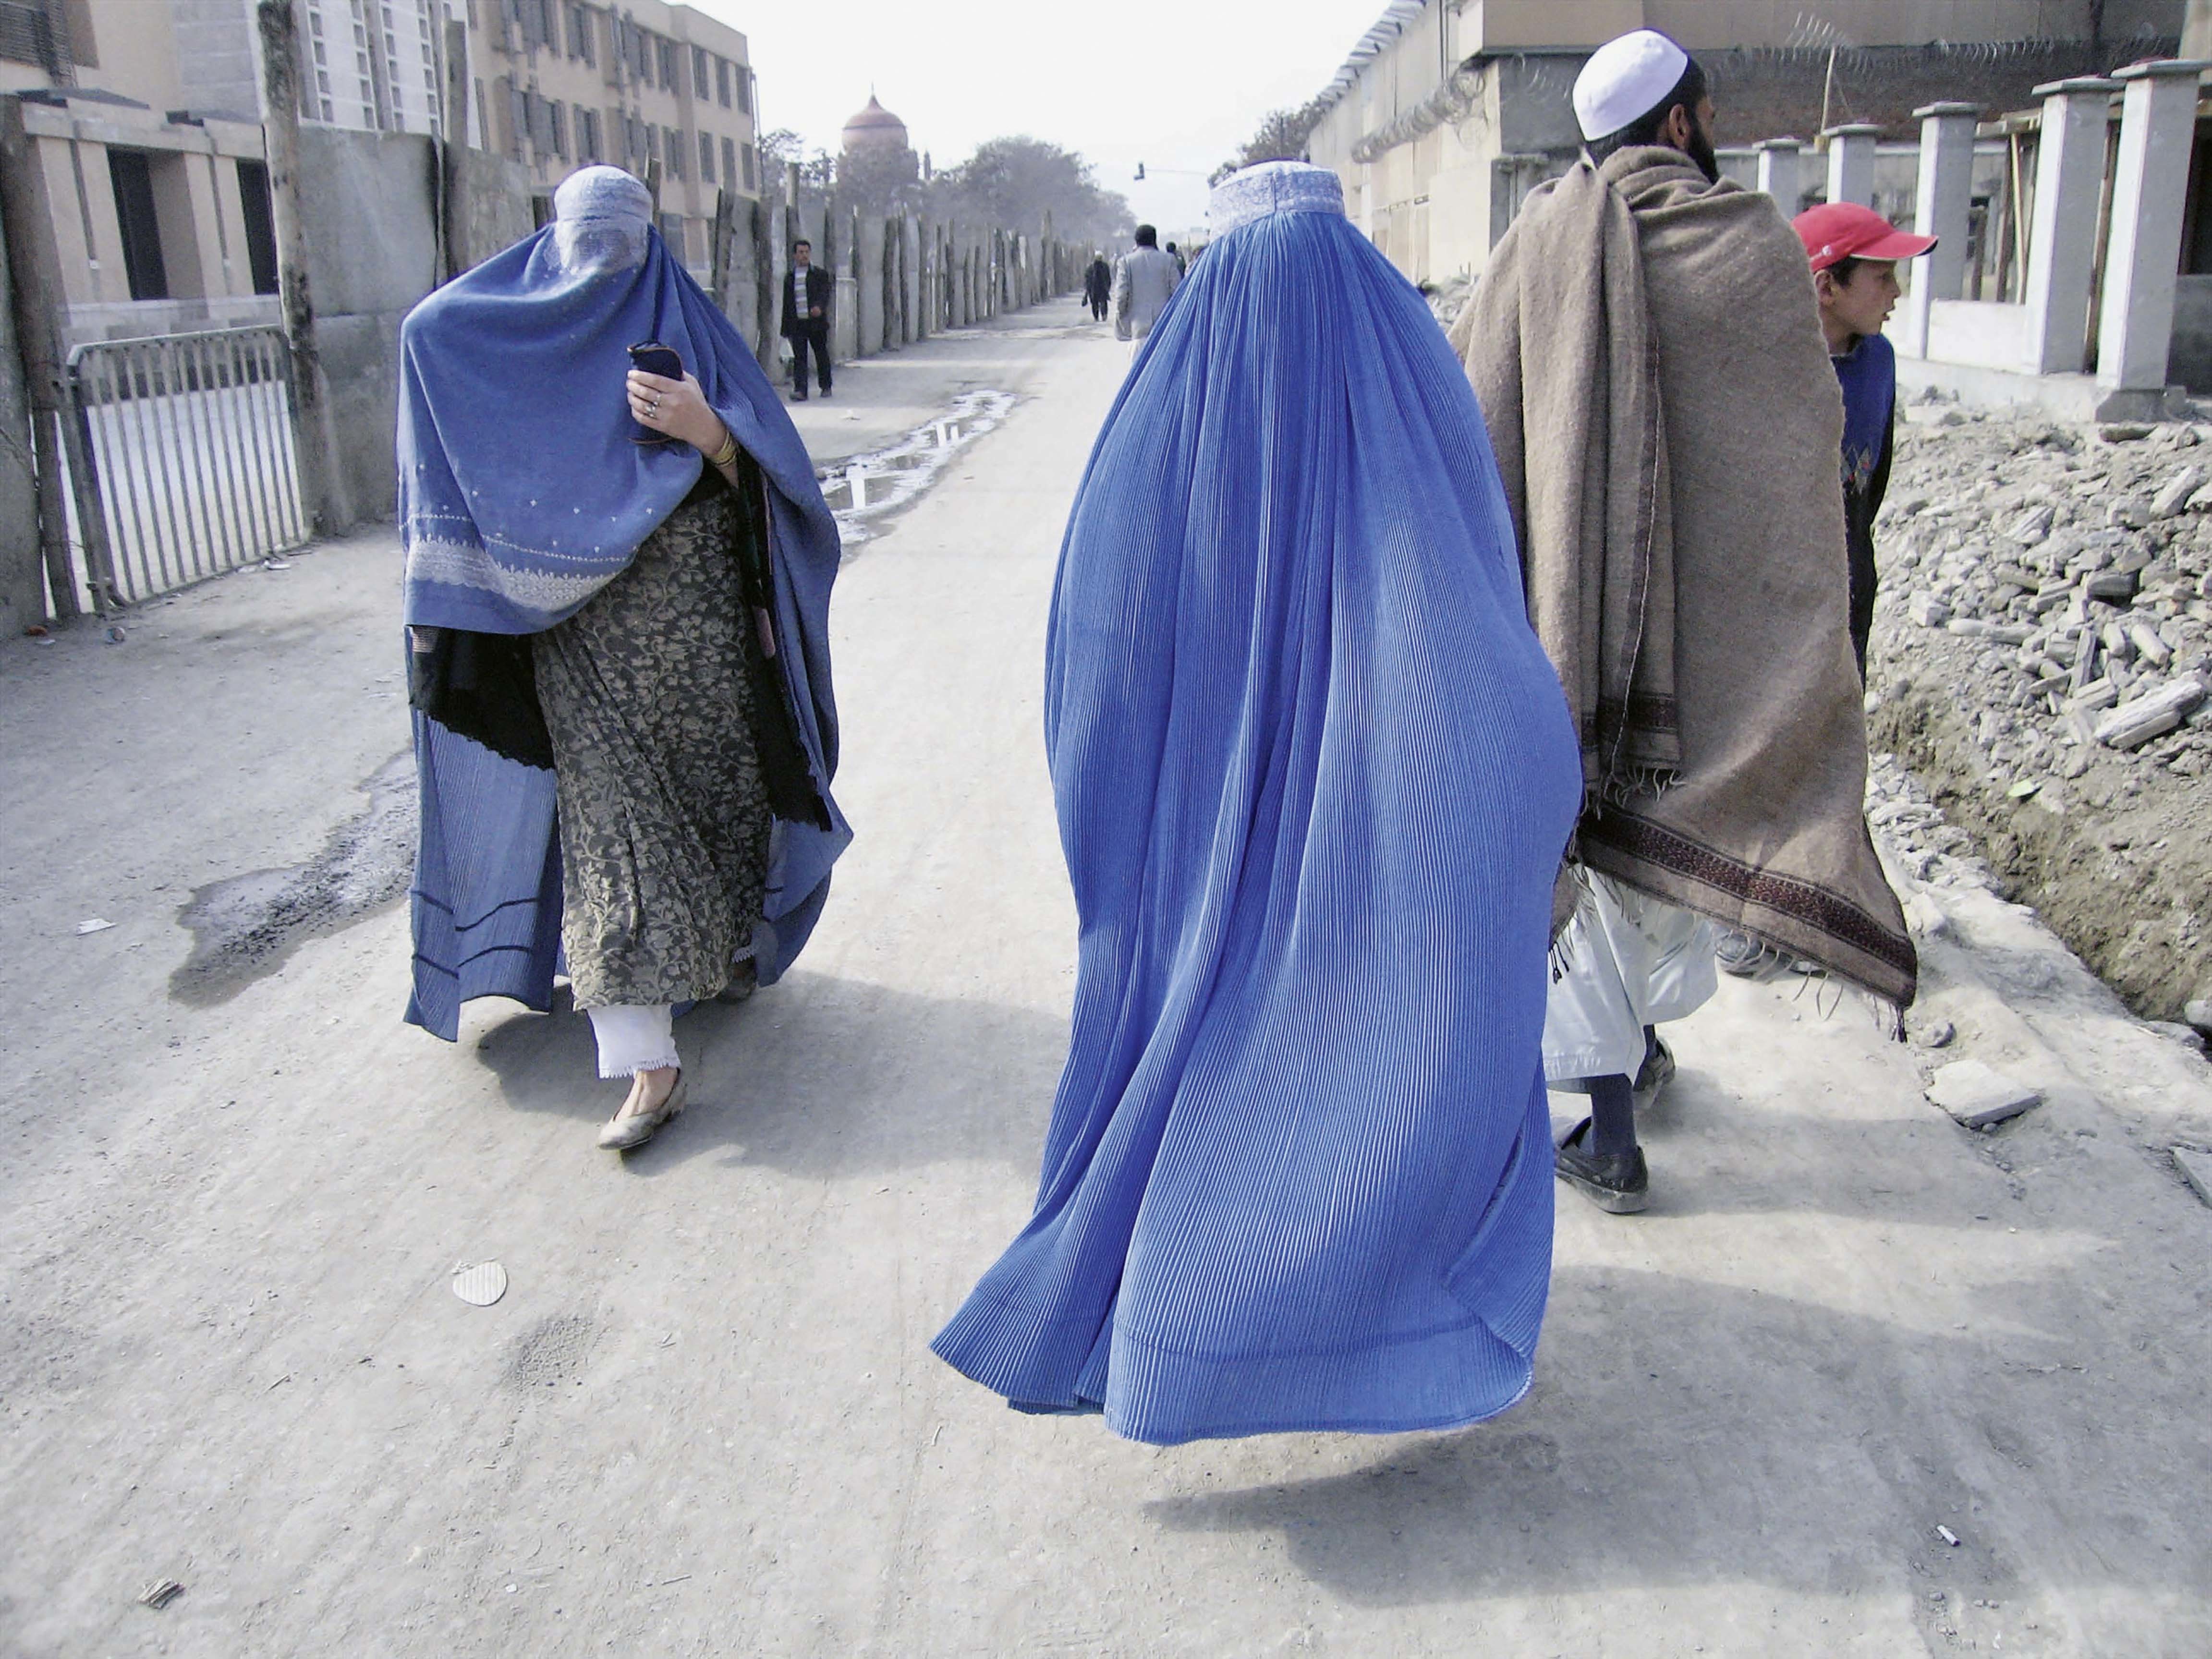 Afghanistan talibans